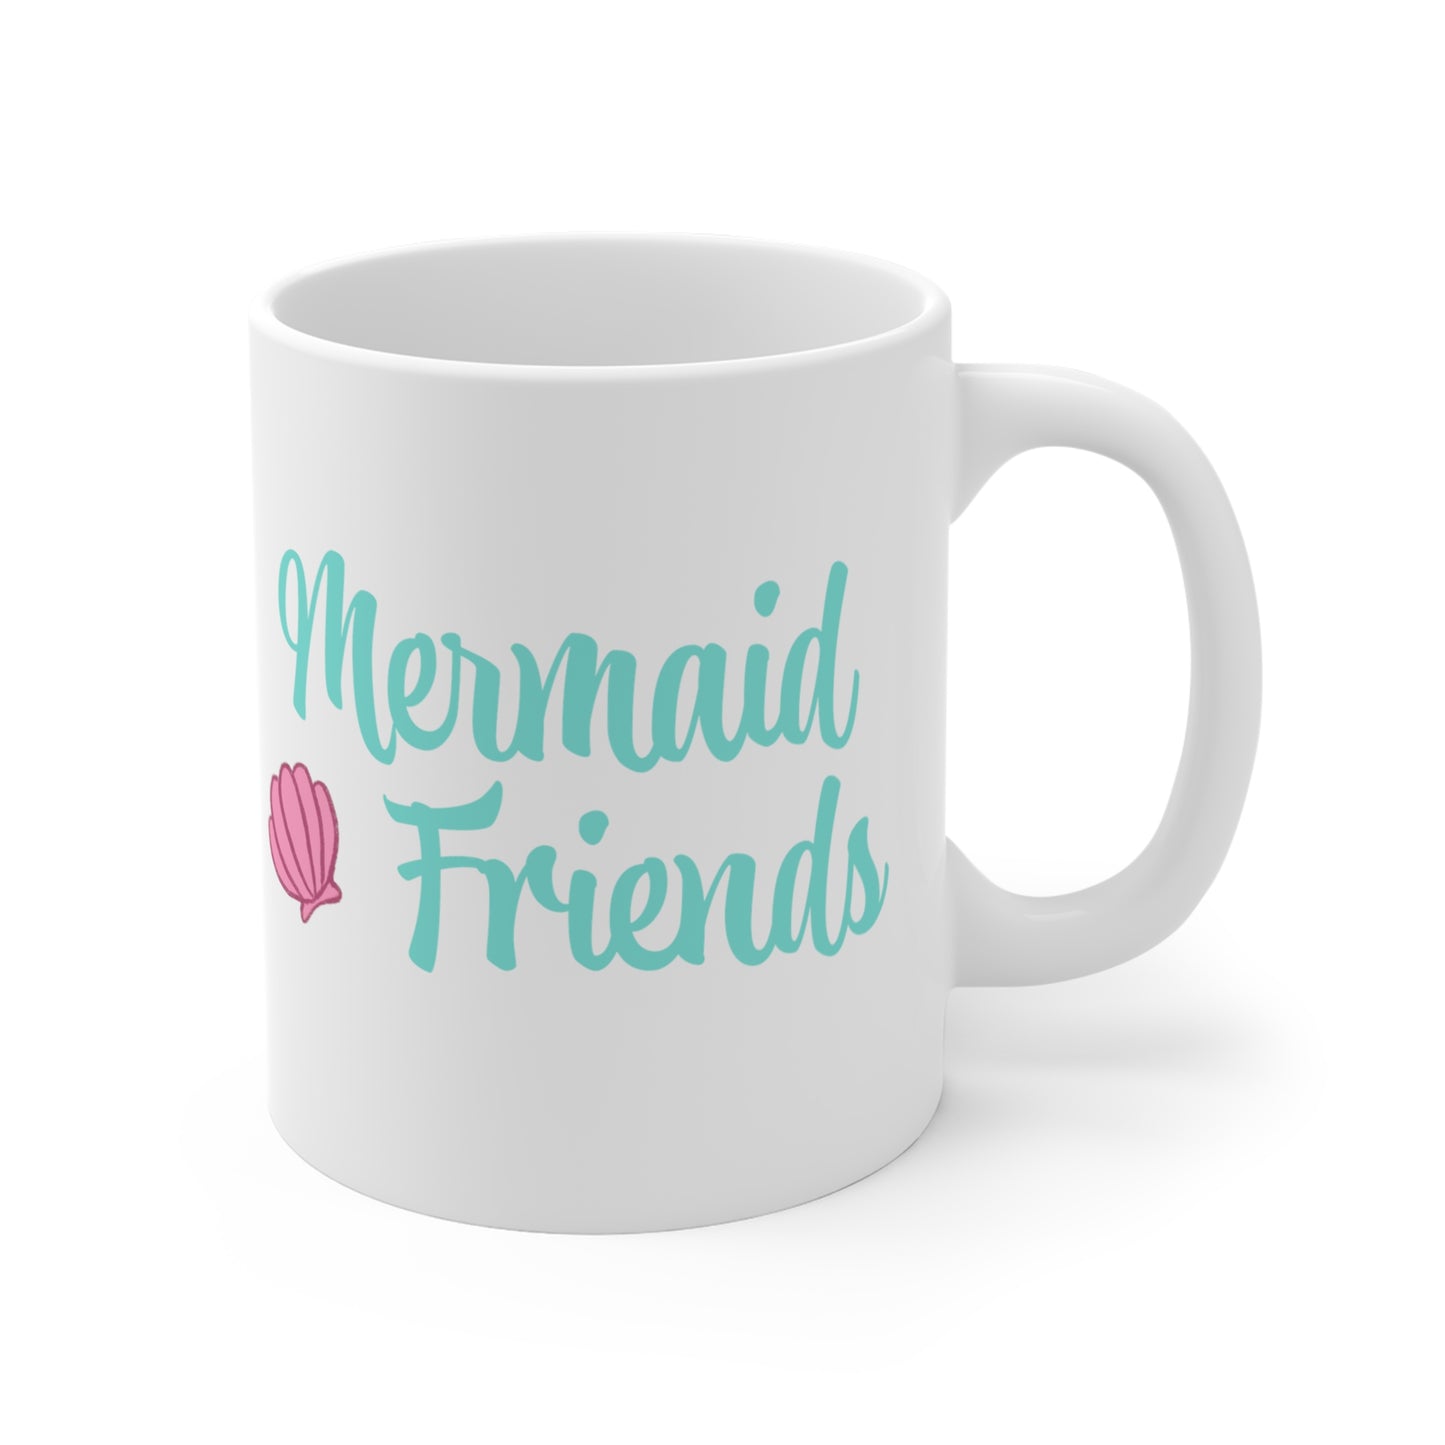 Mermaid Friends Mug